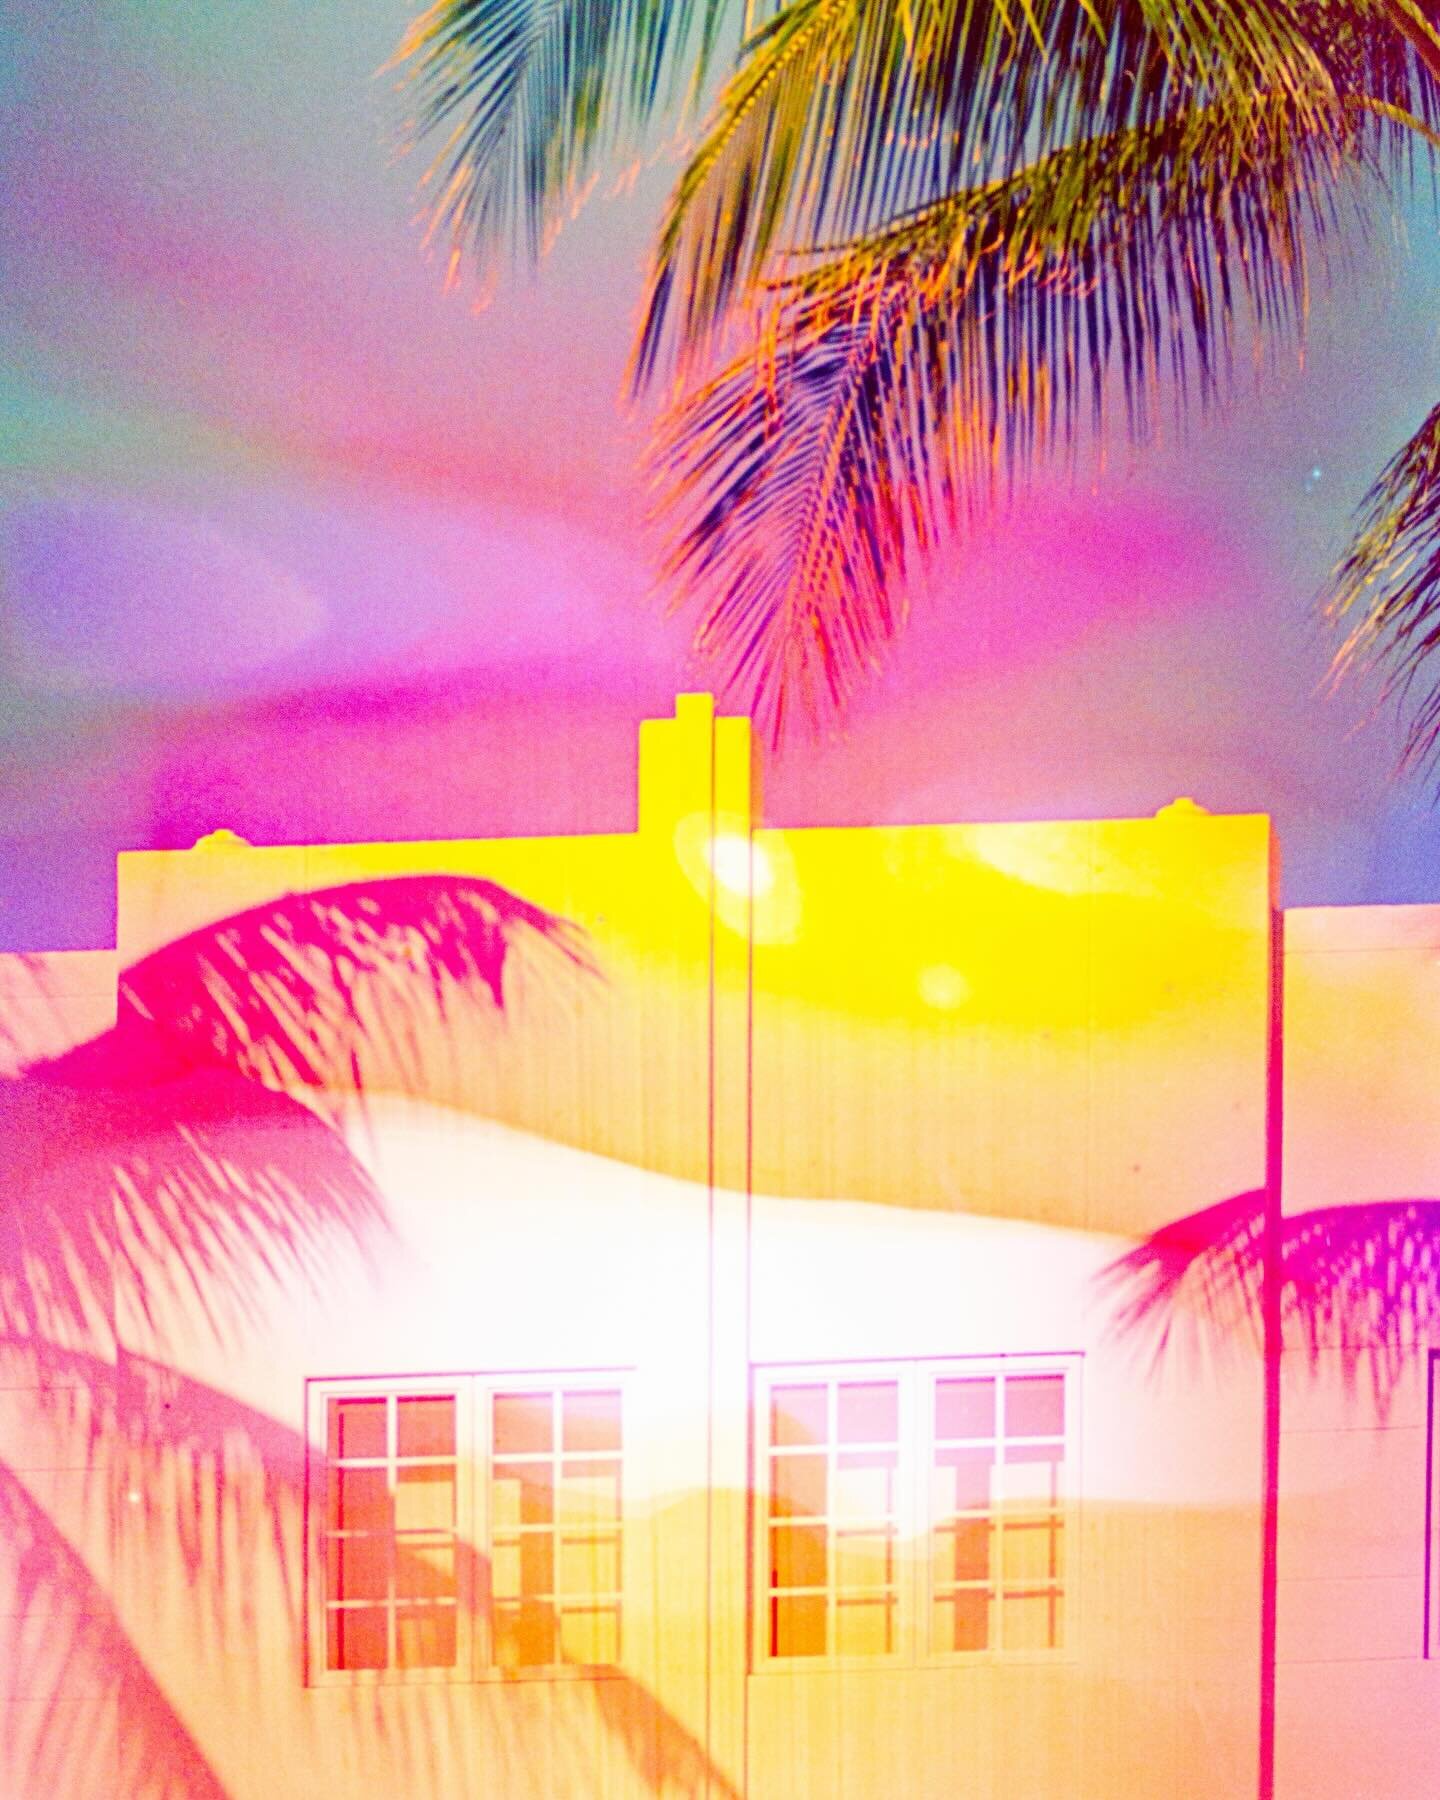 Miami Art Deco meets Barbie pink 💖
.
.
.
.
#filmphotography #shootitwithfilm #filmisnotdead #womenwithfilmwednesday #thefilmsorority #analogforever #filmobsessedclub #shootfilm #filmallover #filmlifemagazine #analogphotography #woofermagazine #filmd